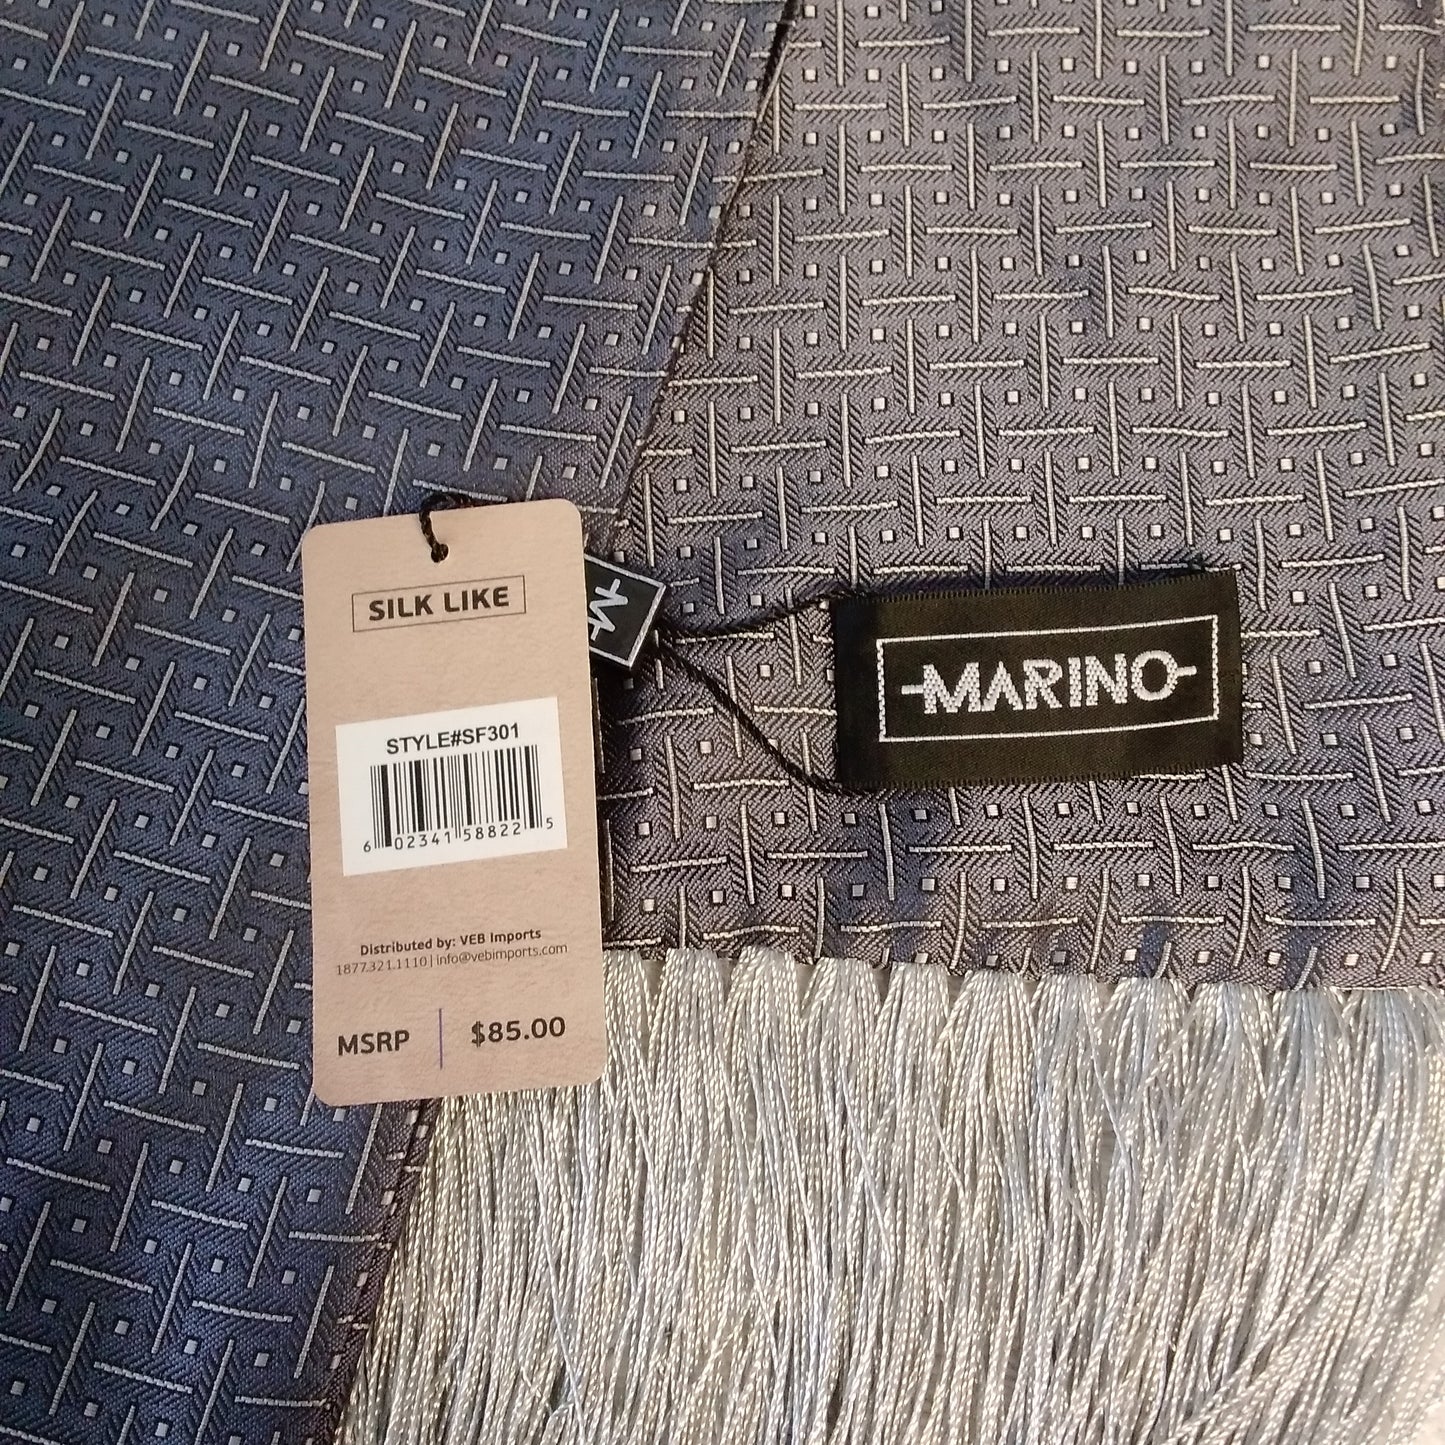 NWT - Marino Avenue Silk Like Gray and Silver Scarf Style #SF301